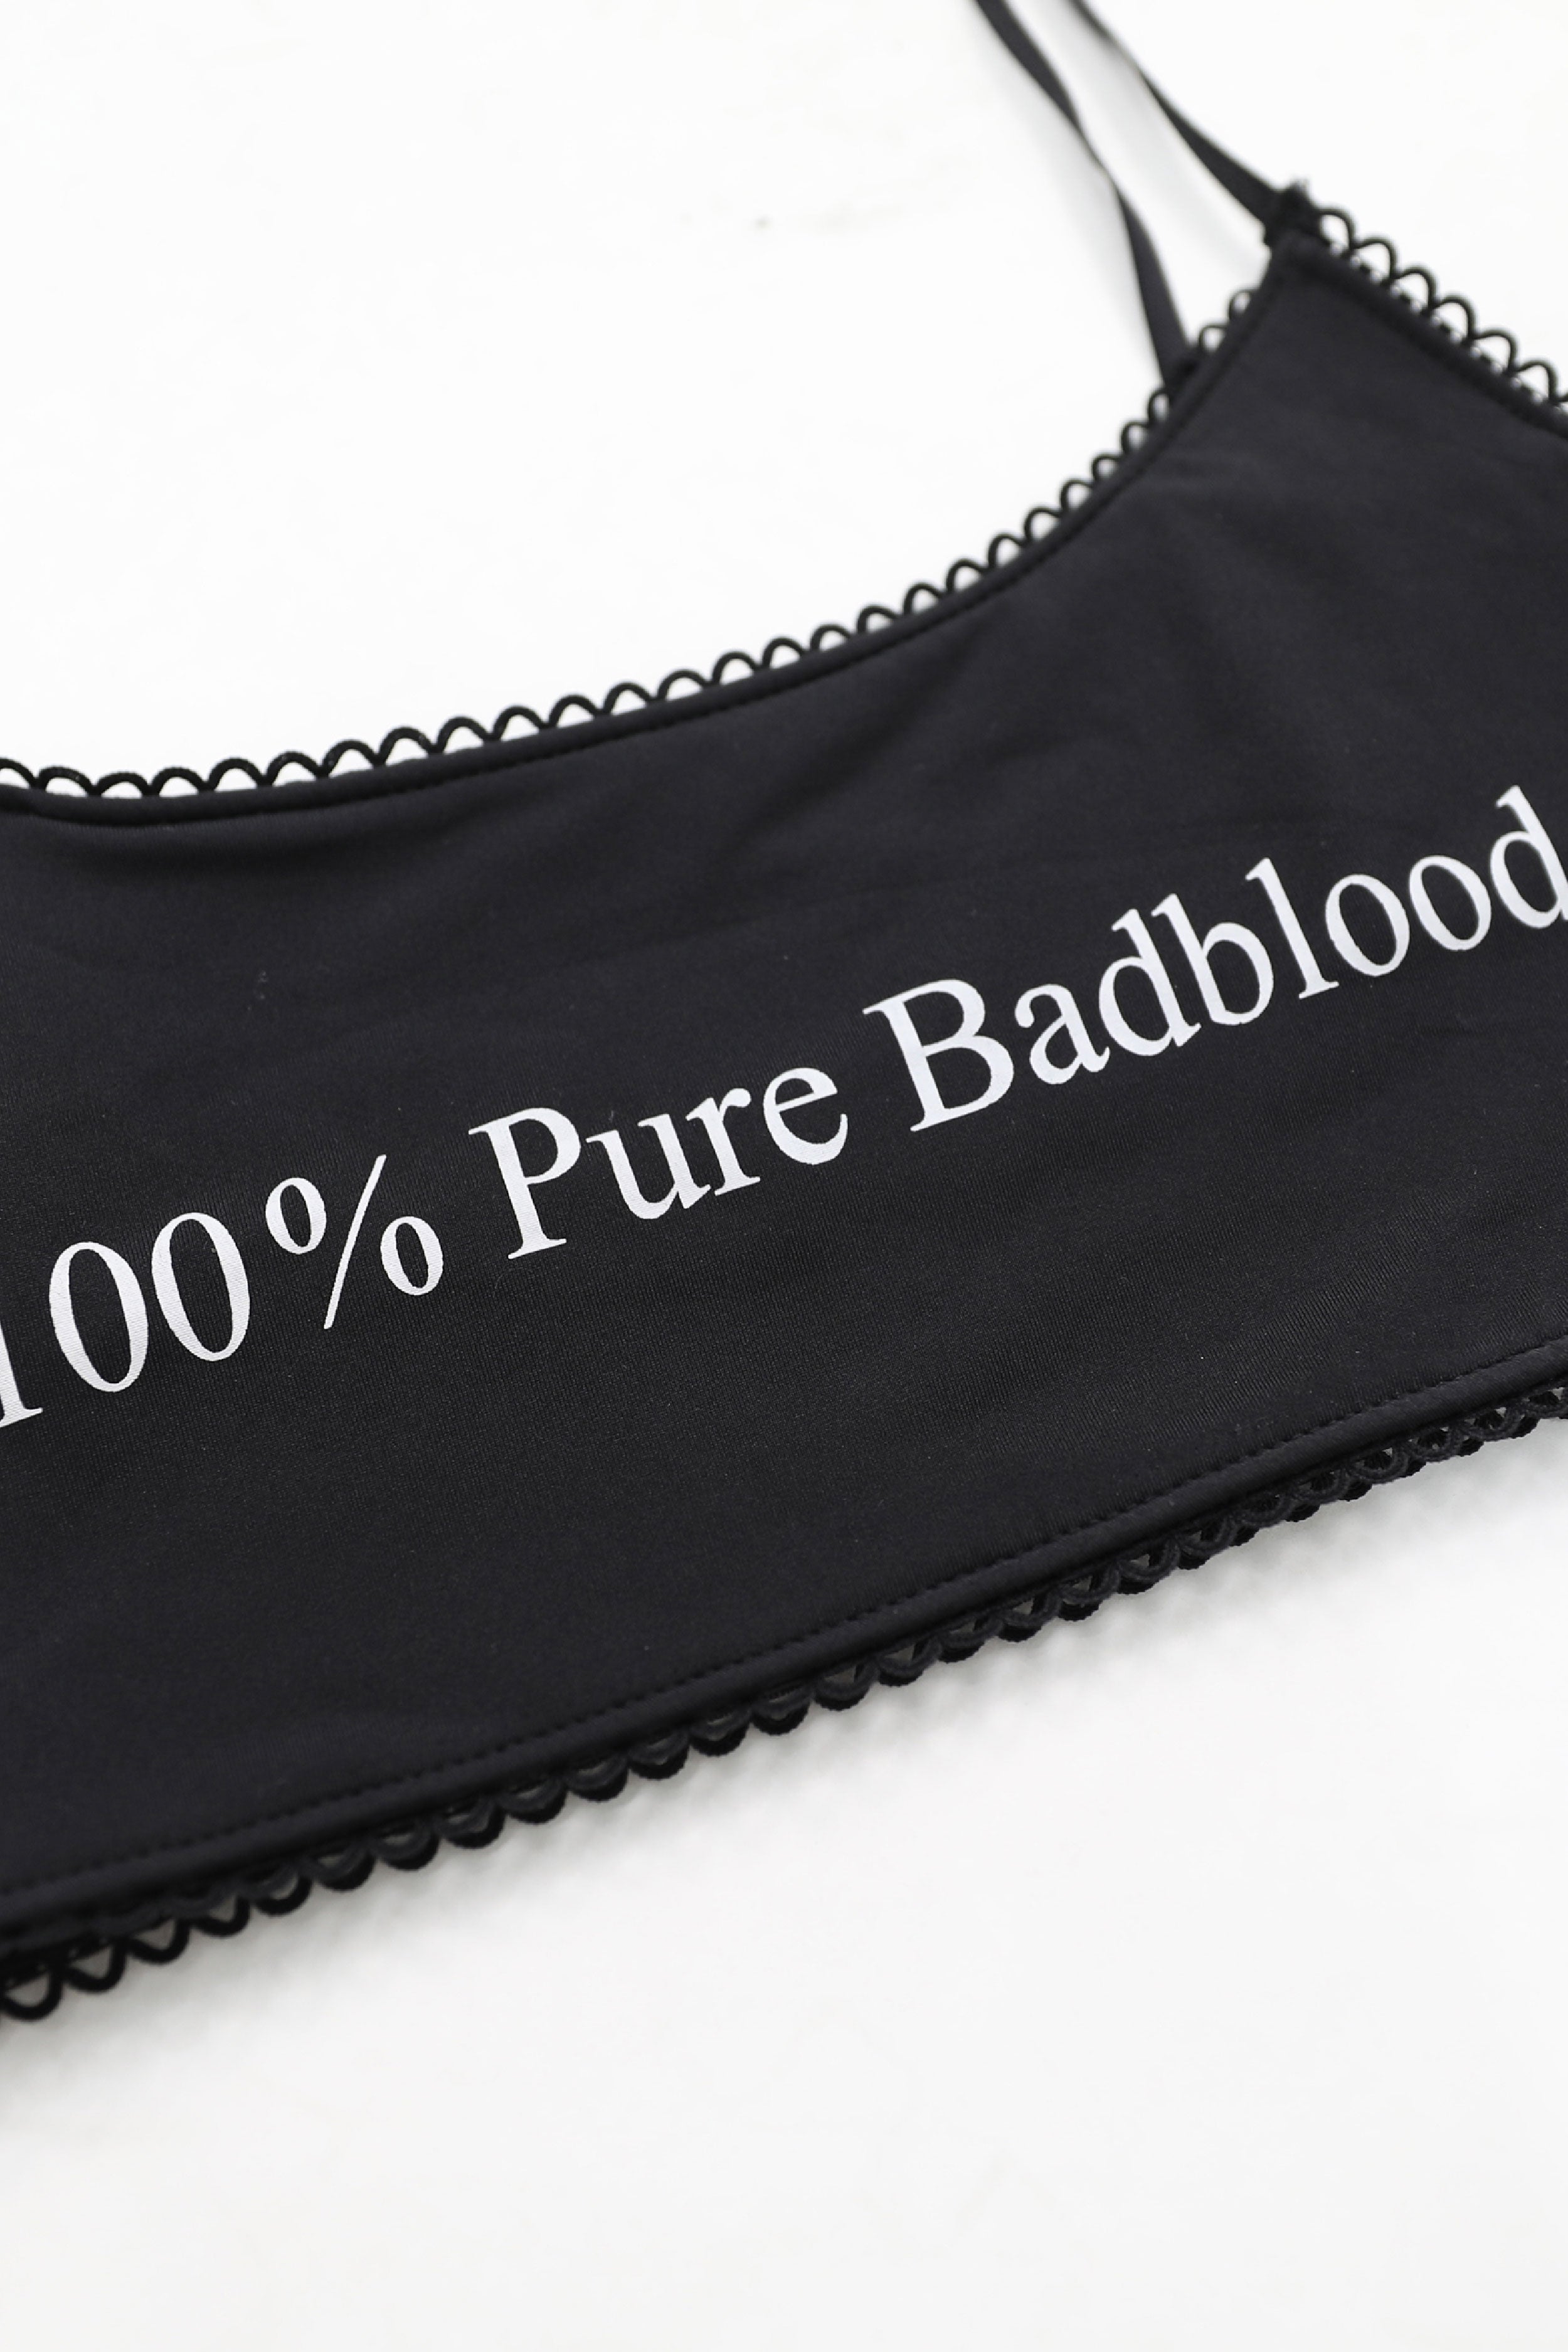 Badblood Pure 湯匙形比基尼上衣 黑色